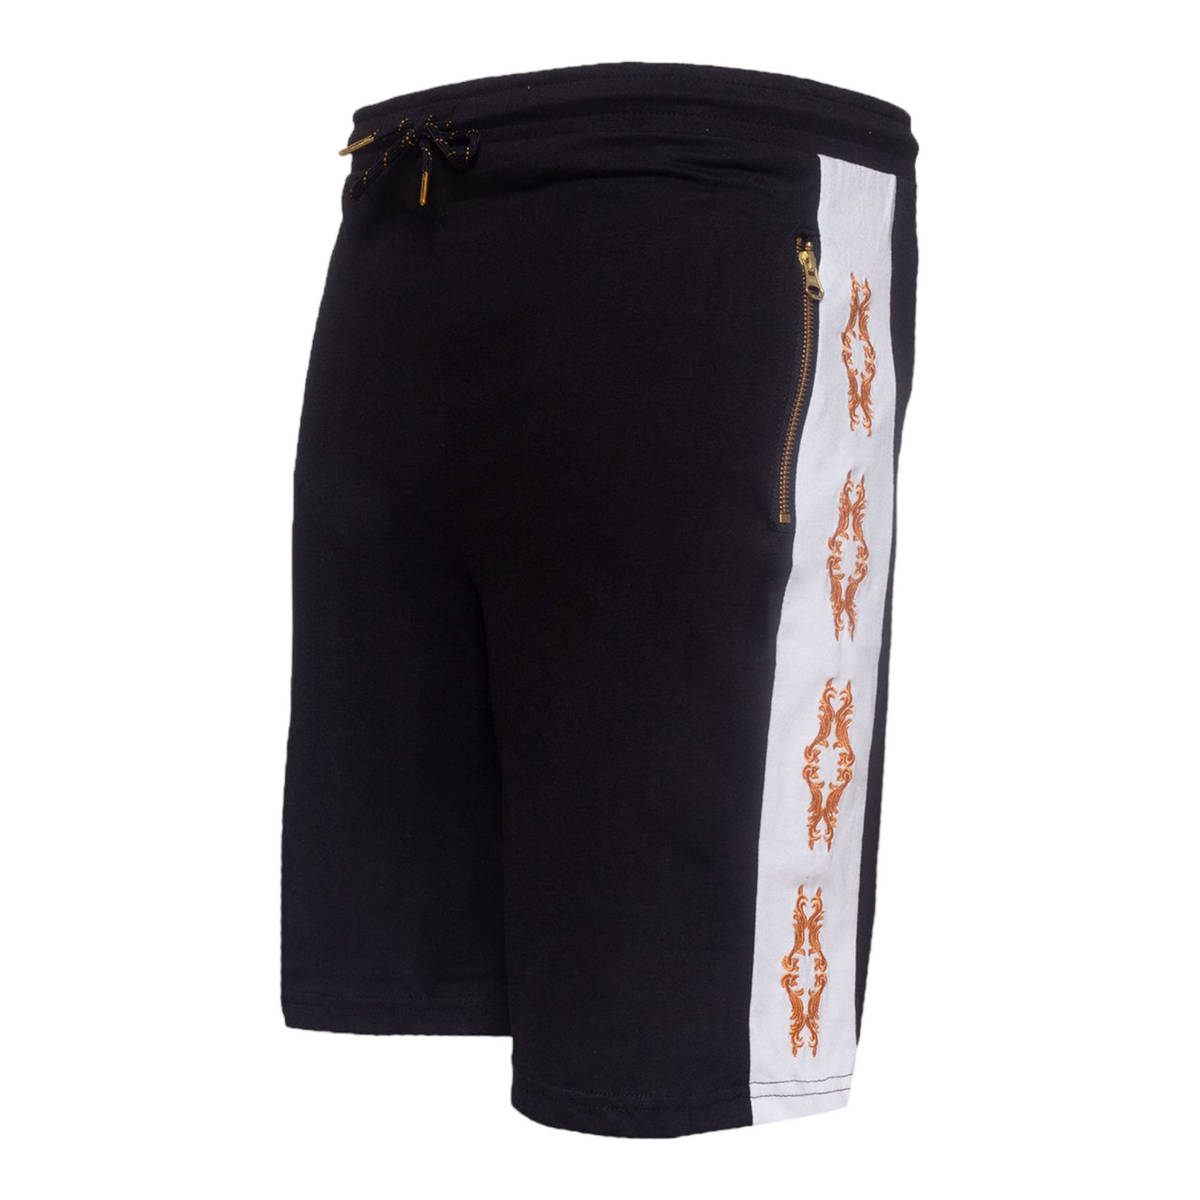 MDB Brand Men's Lightweight Cotton Shorts - Dark Colors